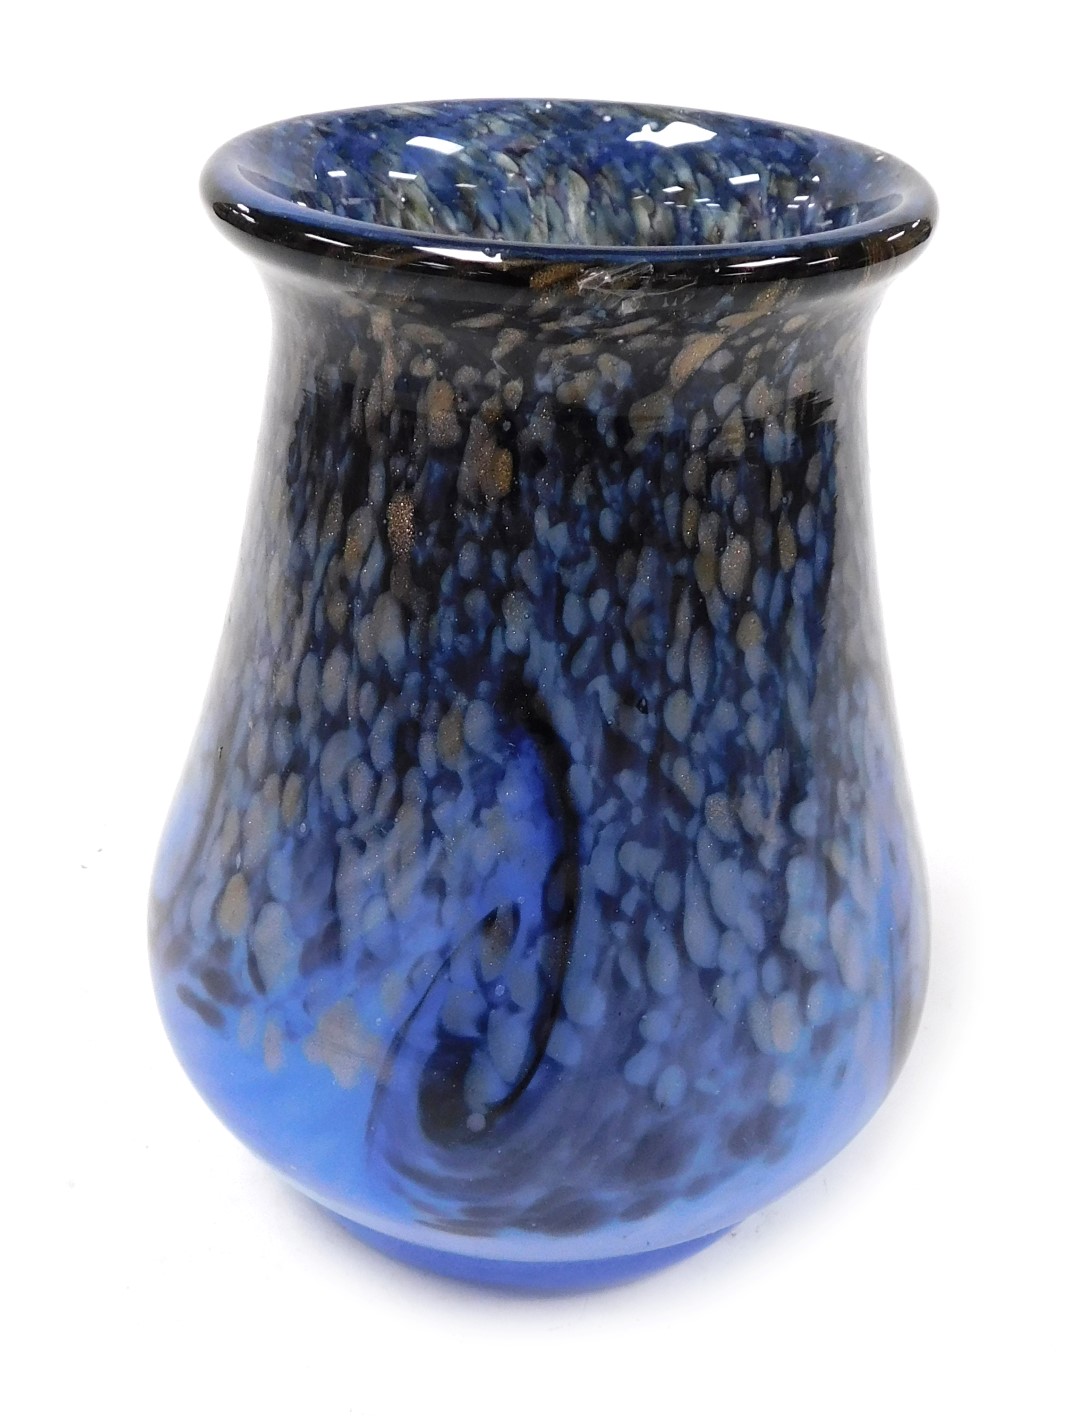 A mid century Monart blue glass vase, with a darker blue and aventurine decoration, 18.5cm high.